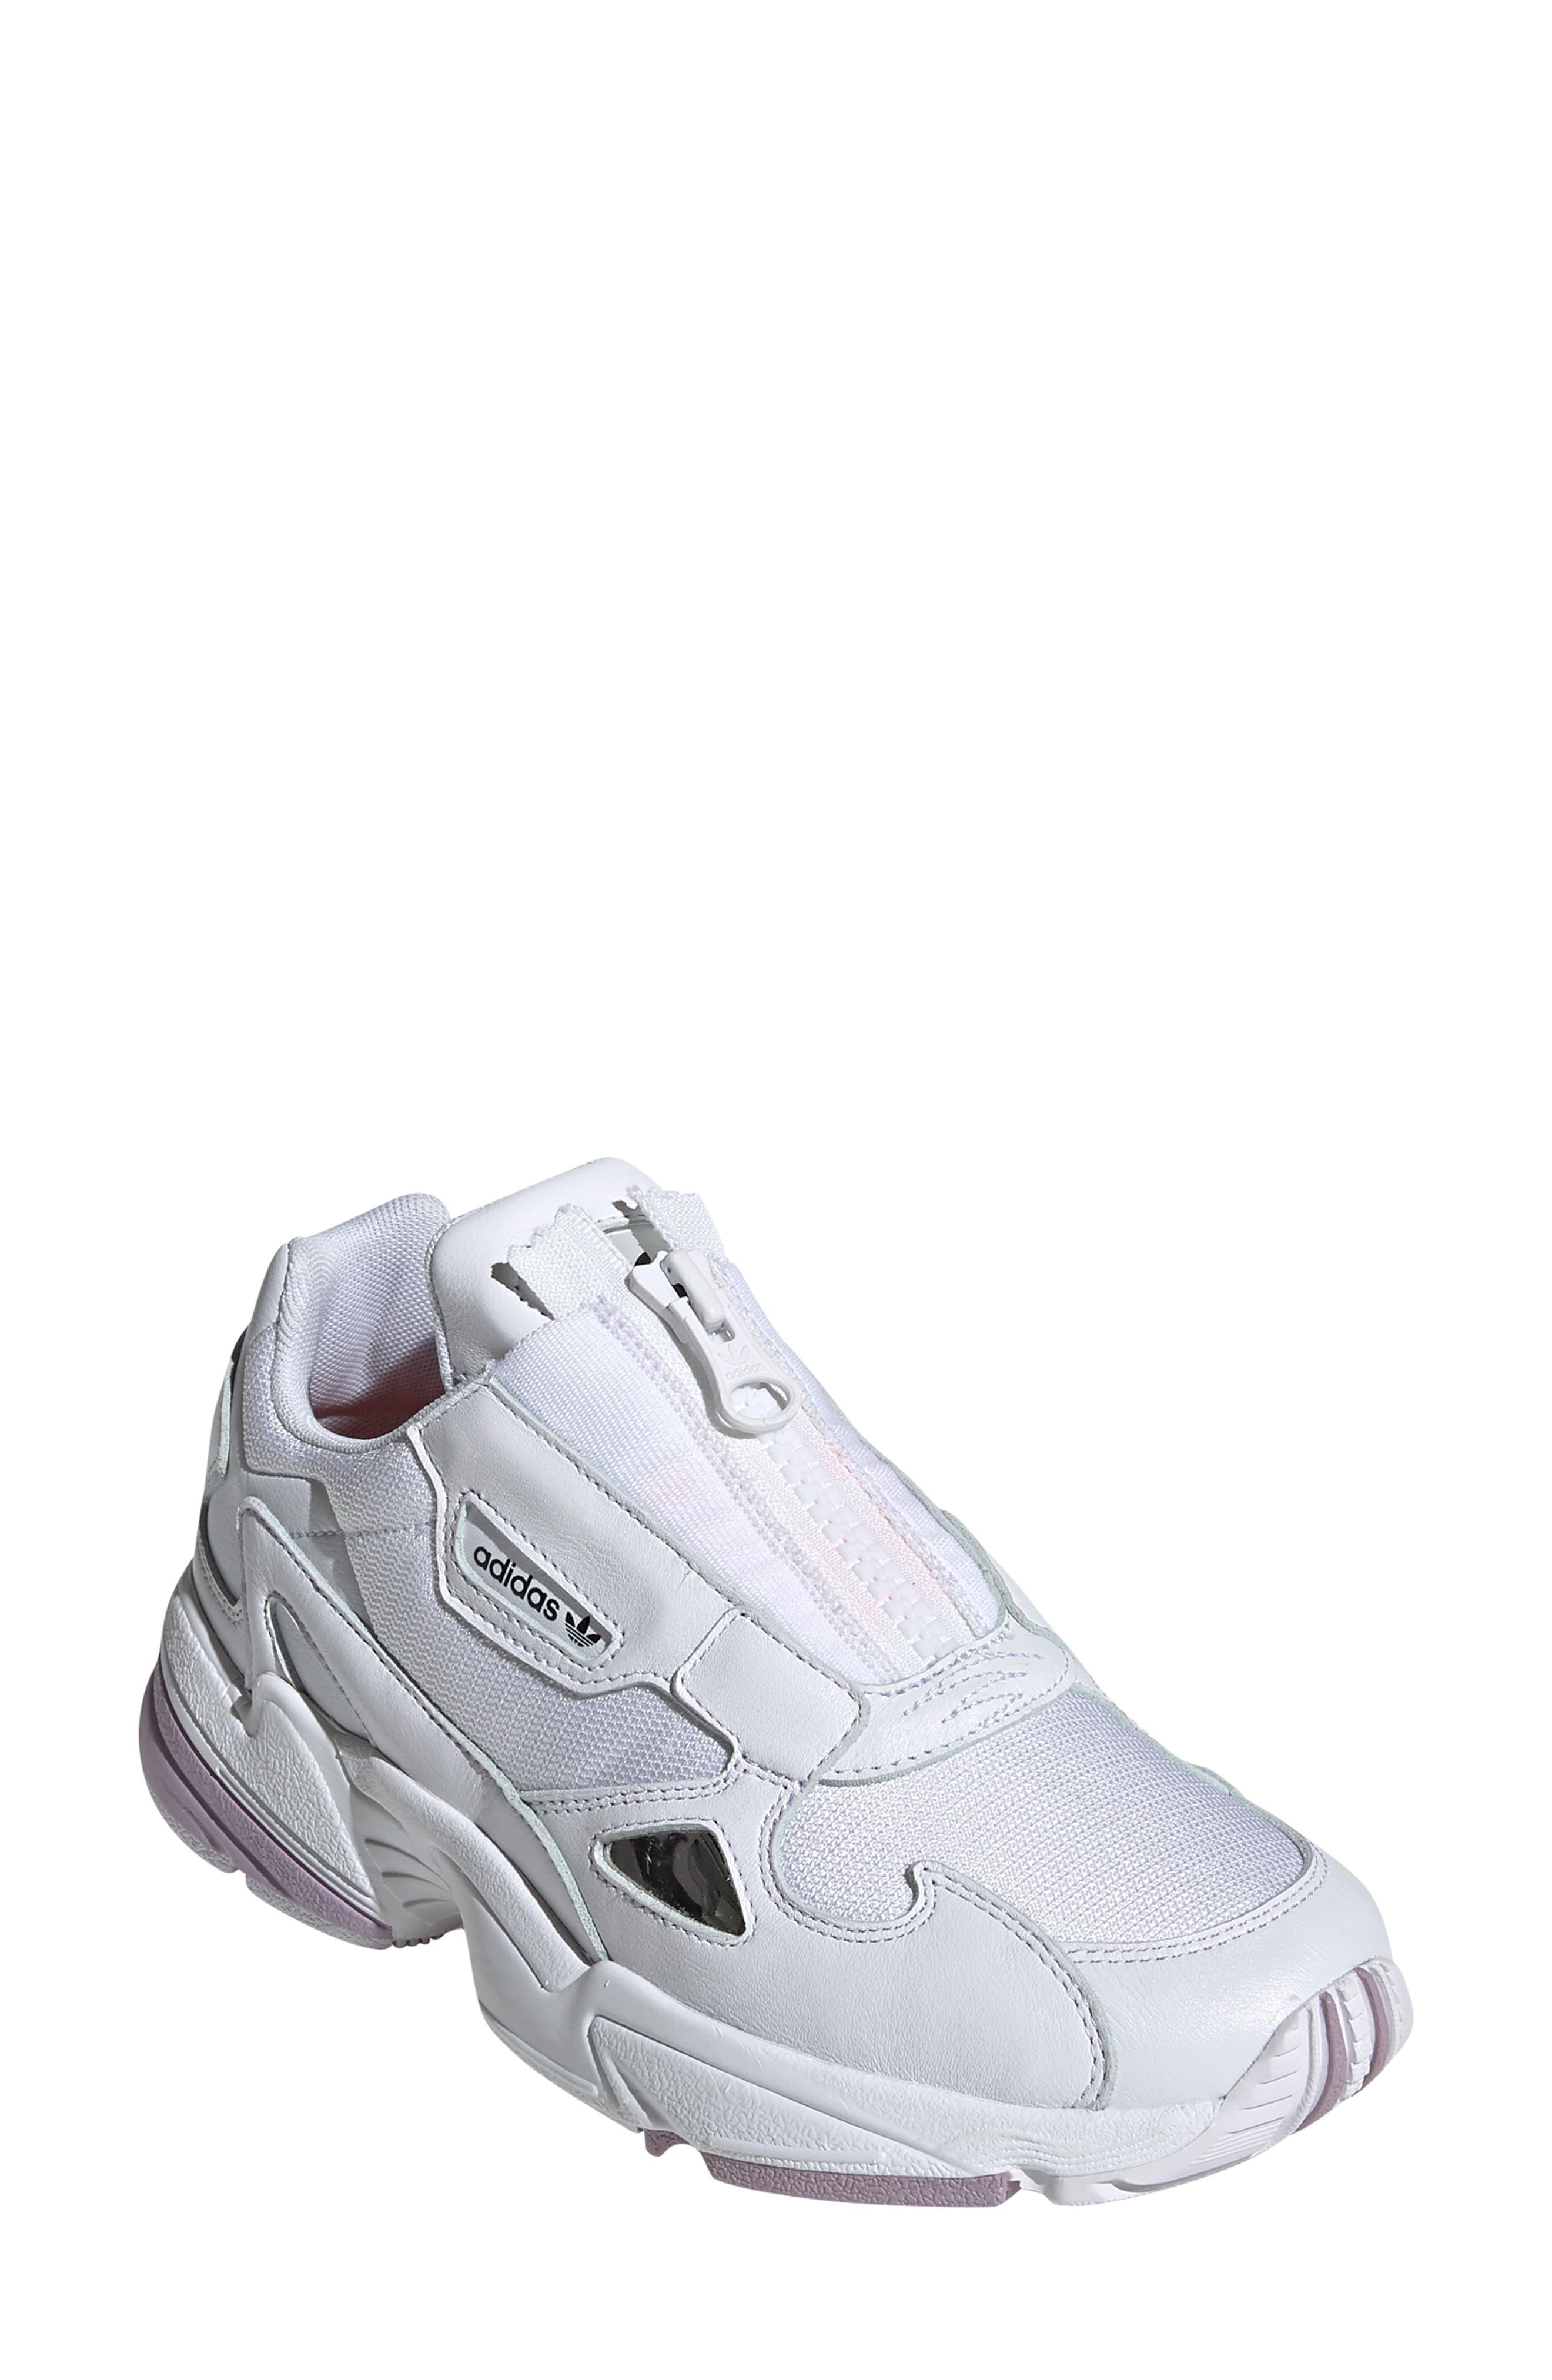 falcon zip shoes adidas